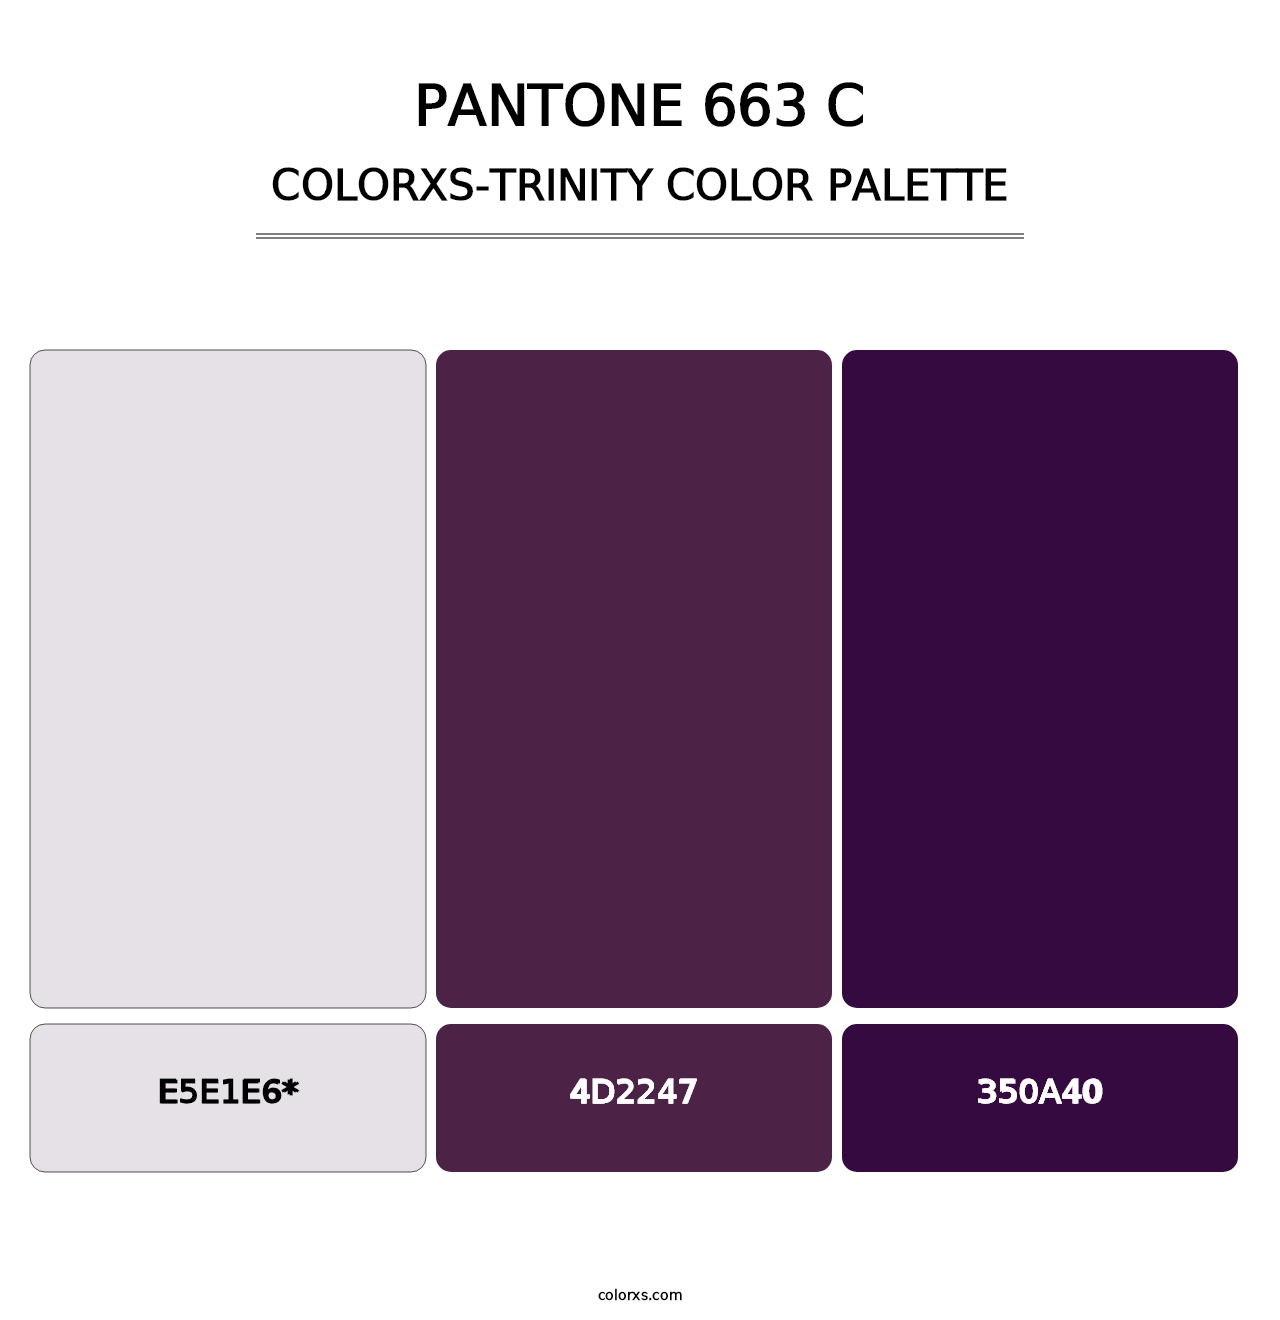 PANTONE 663 C - Colorxs Trinity Palette